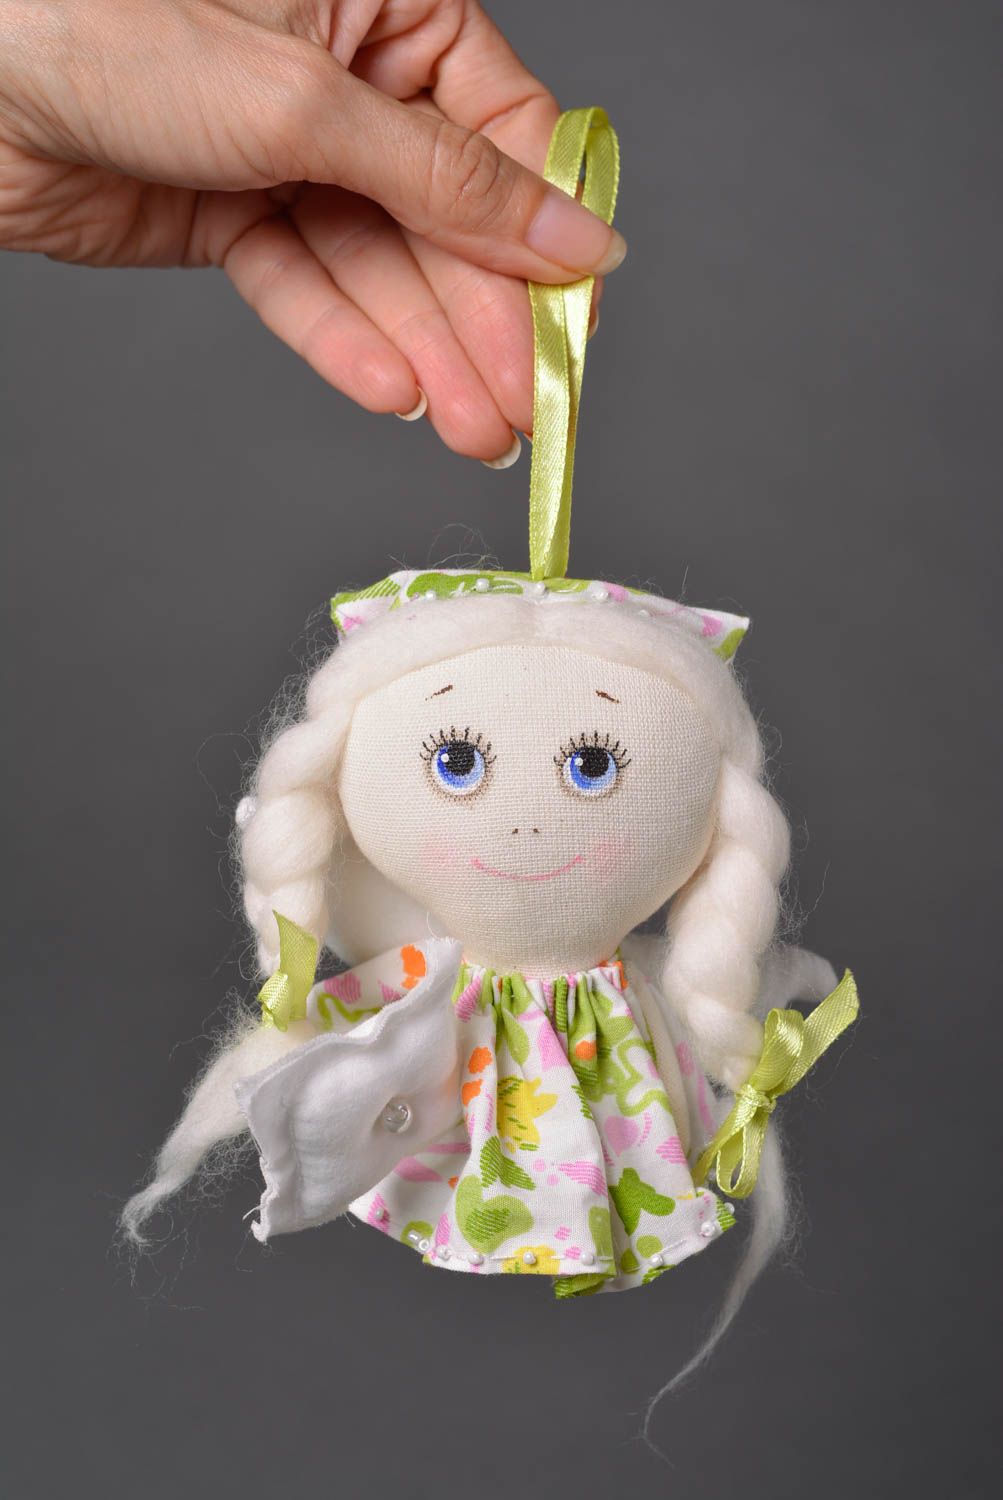 Handmade doll unusual doll decor ideas designer toy for children gift ideas photo 4